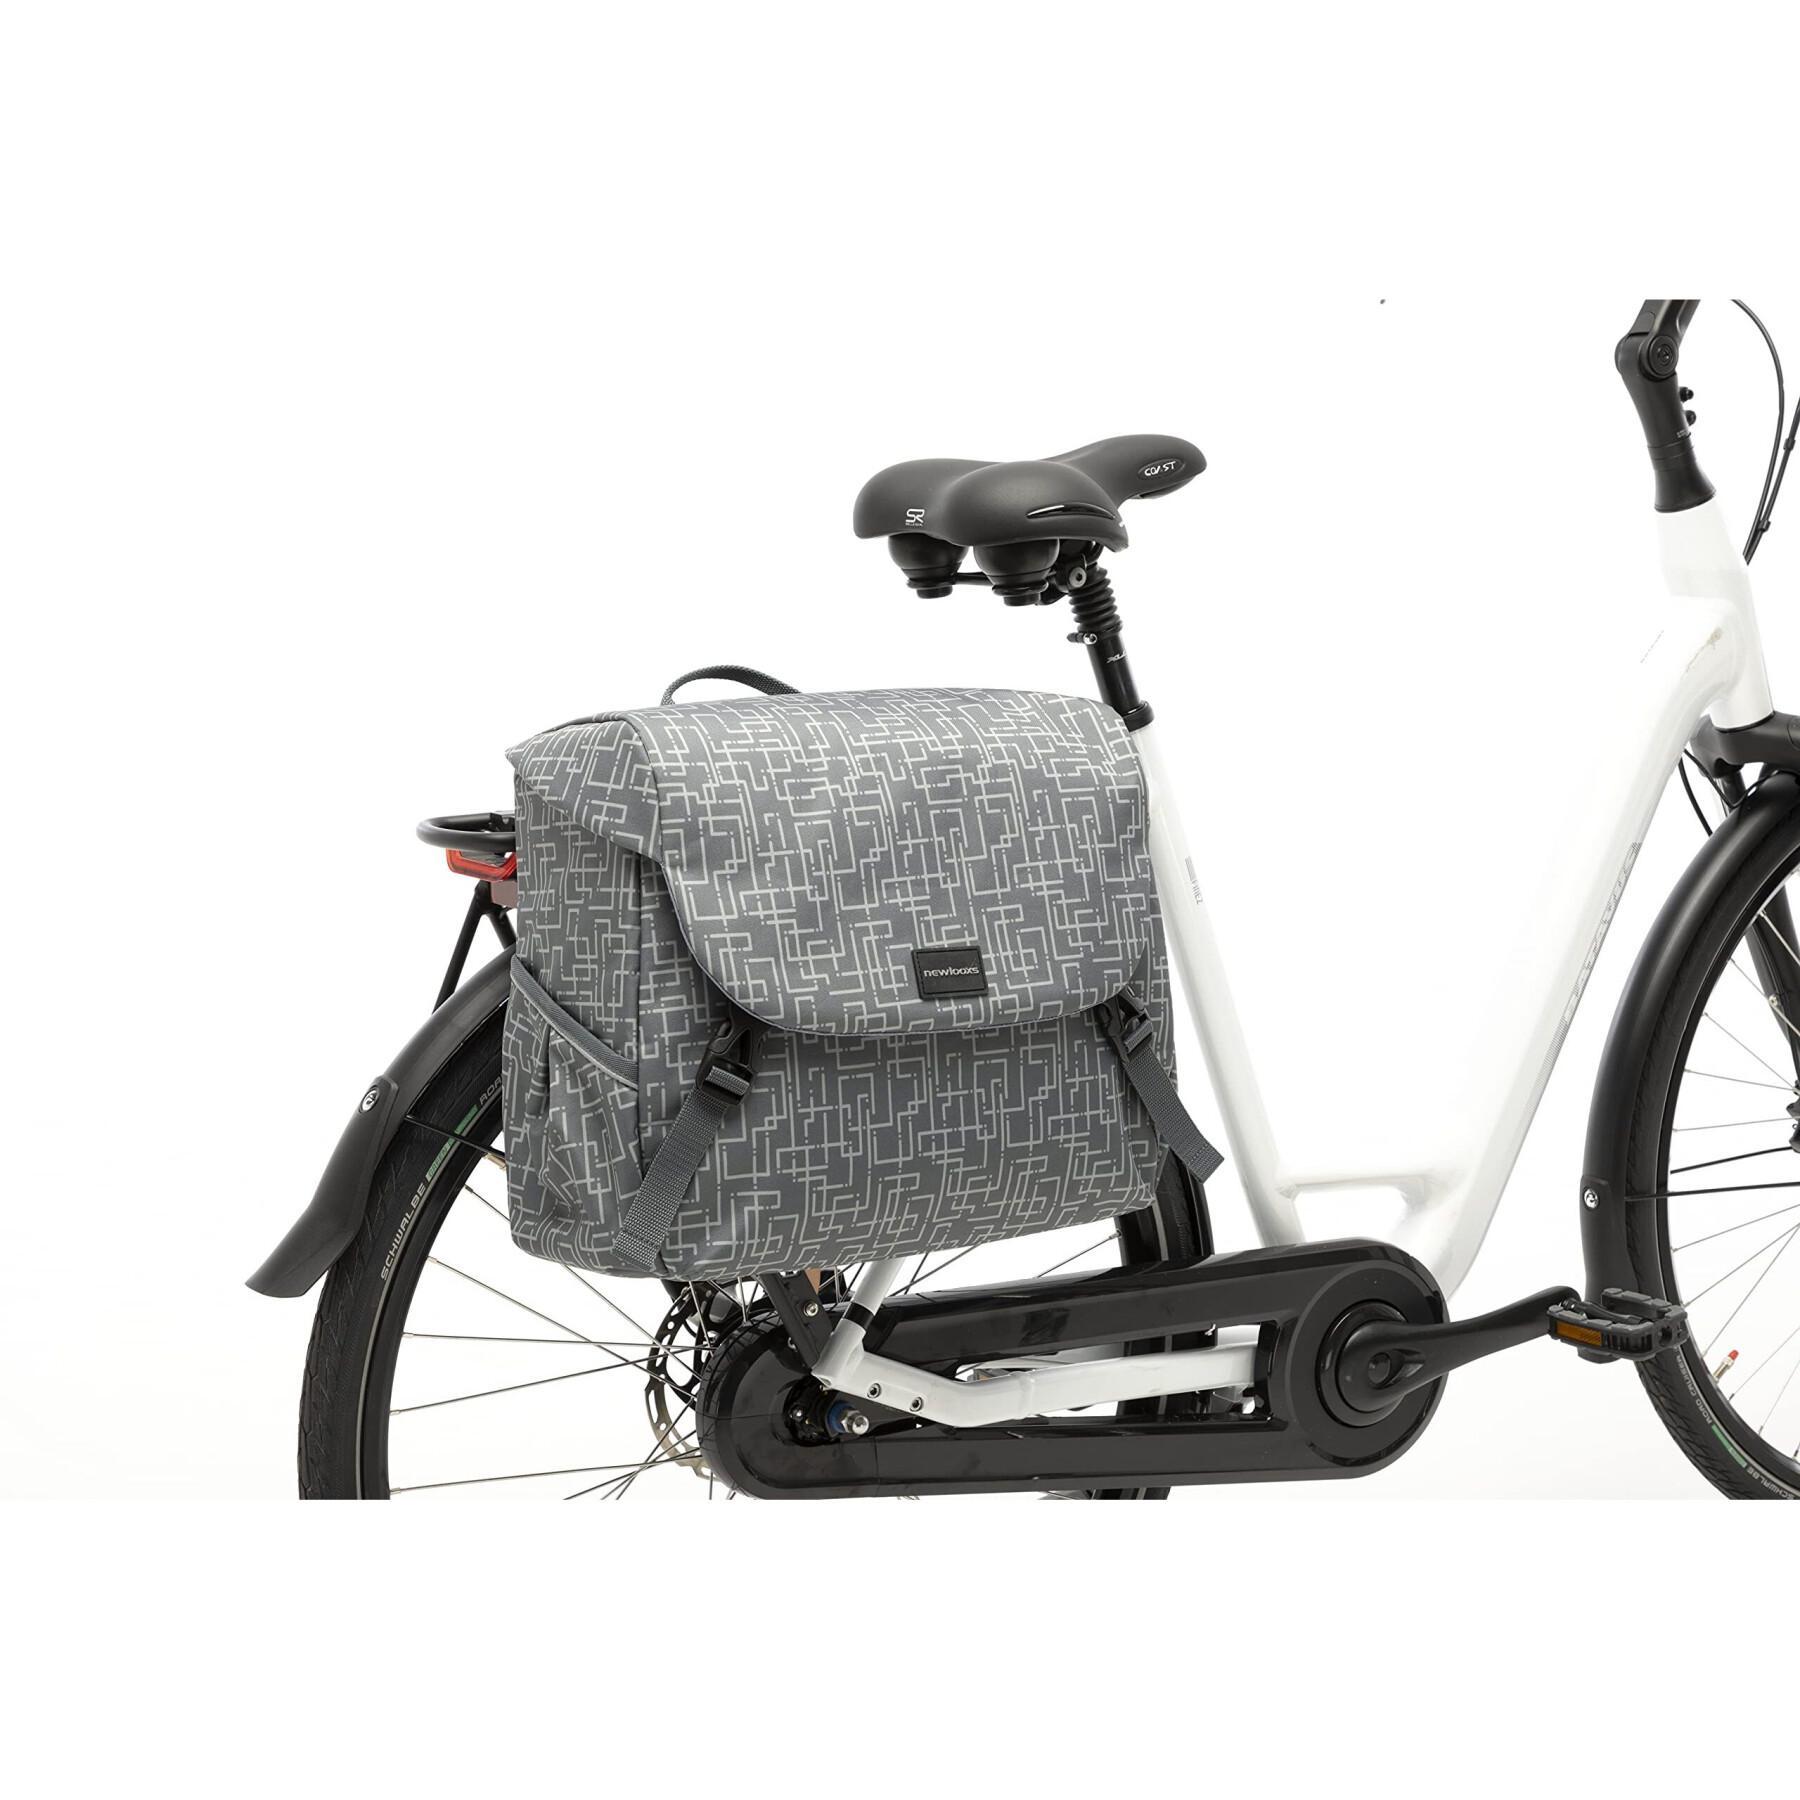 Reflective polyester waterproof bike carrier bag New Looxs Mondi joy